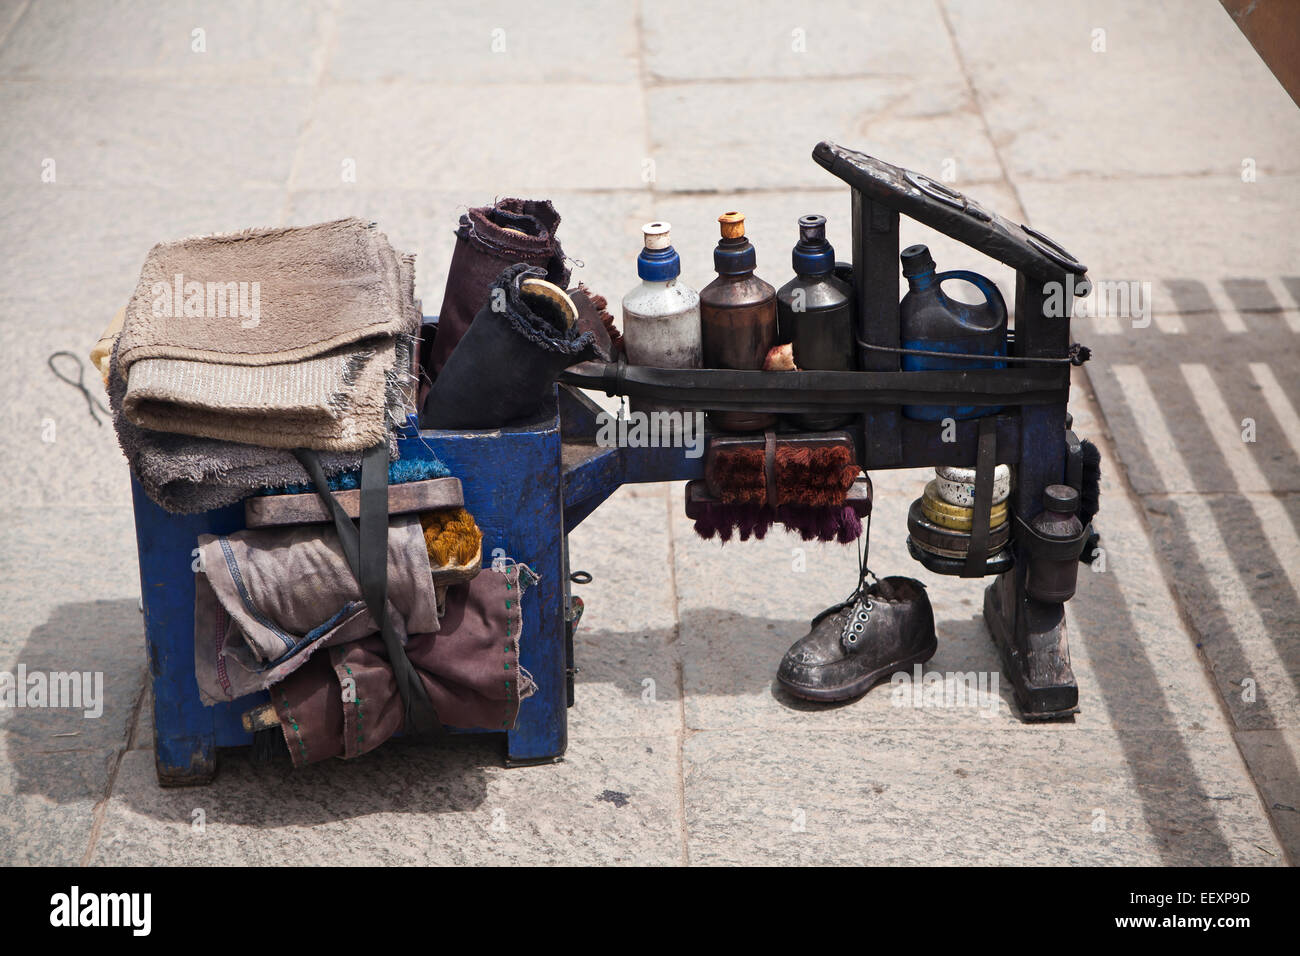 'Shoe shine' kit on stand/seat in Lima, Peru. Stock Photo